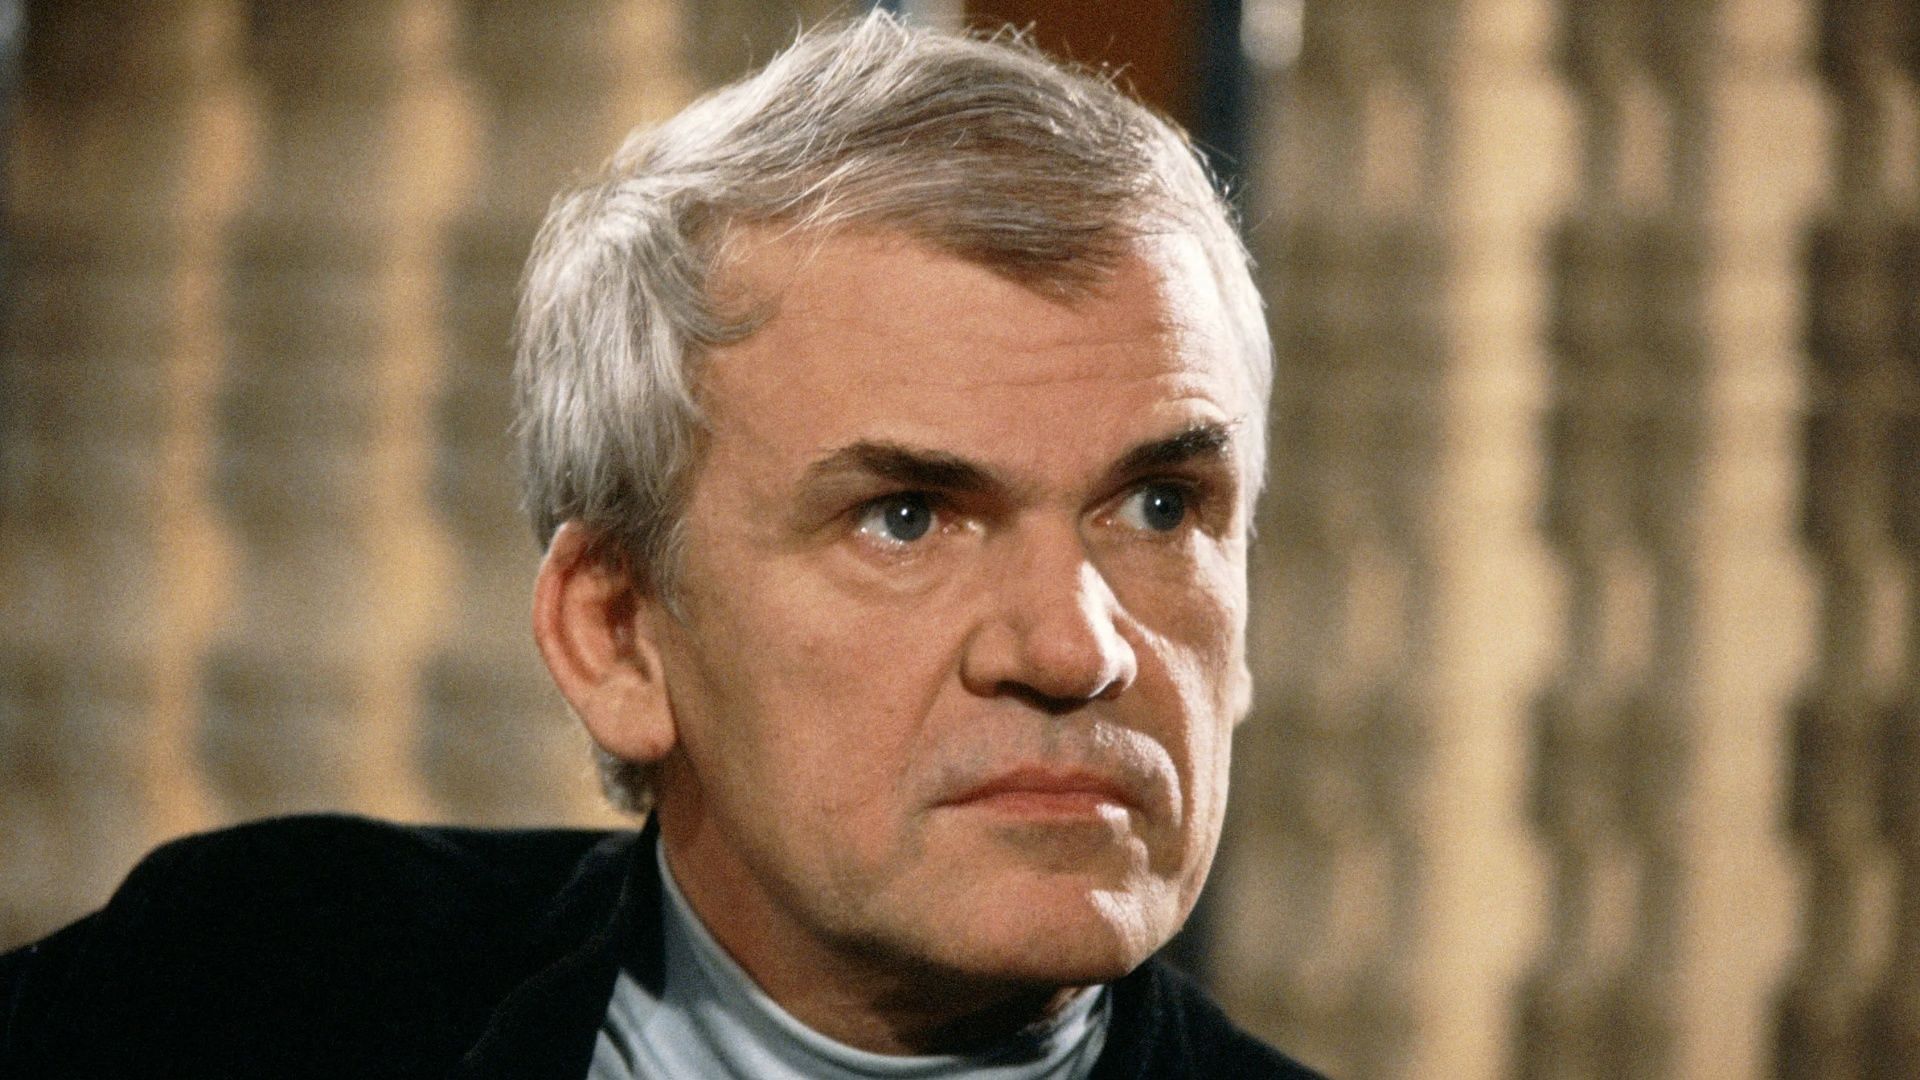 Milan Kundera. (Image via Getty Images)